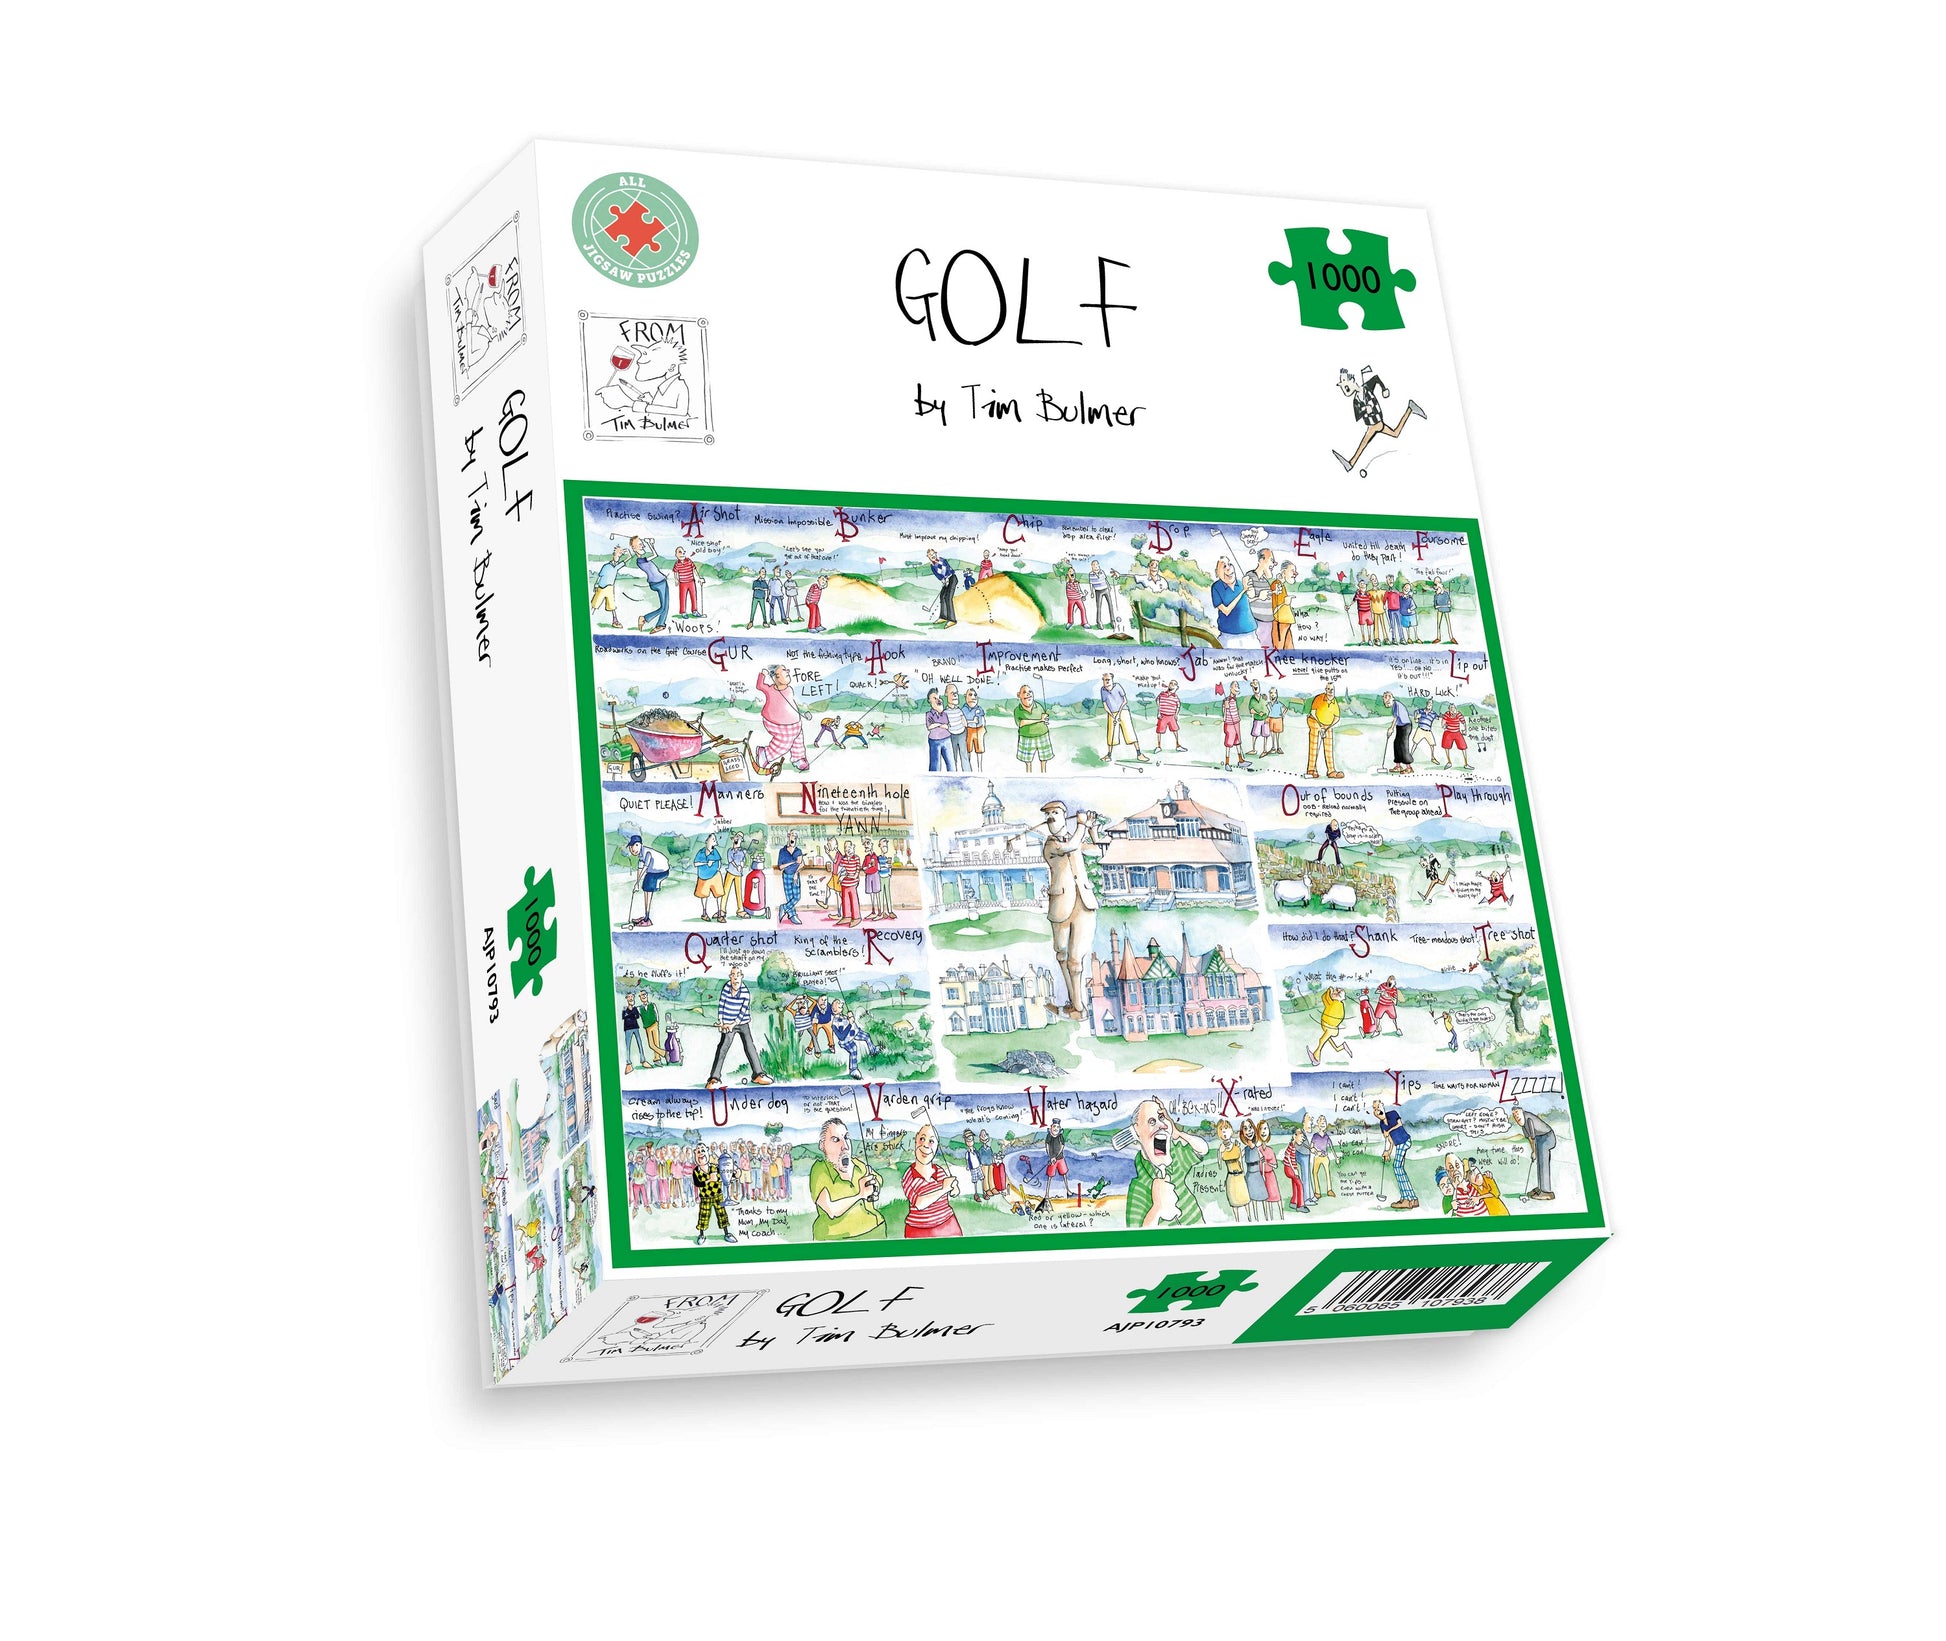 Golf - Tim Bulmer 1000 Piece Jigsaw Puzzle